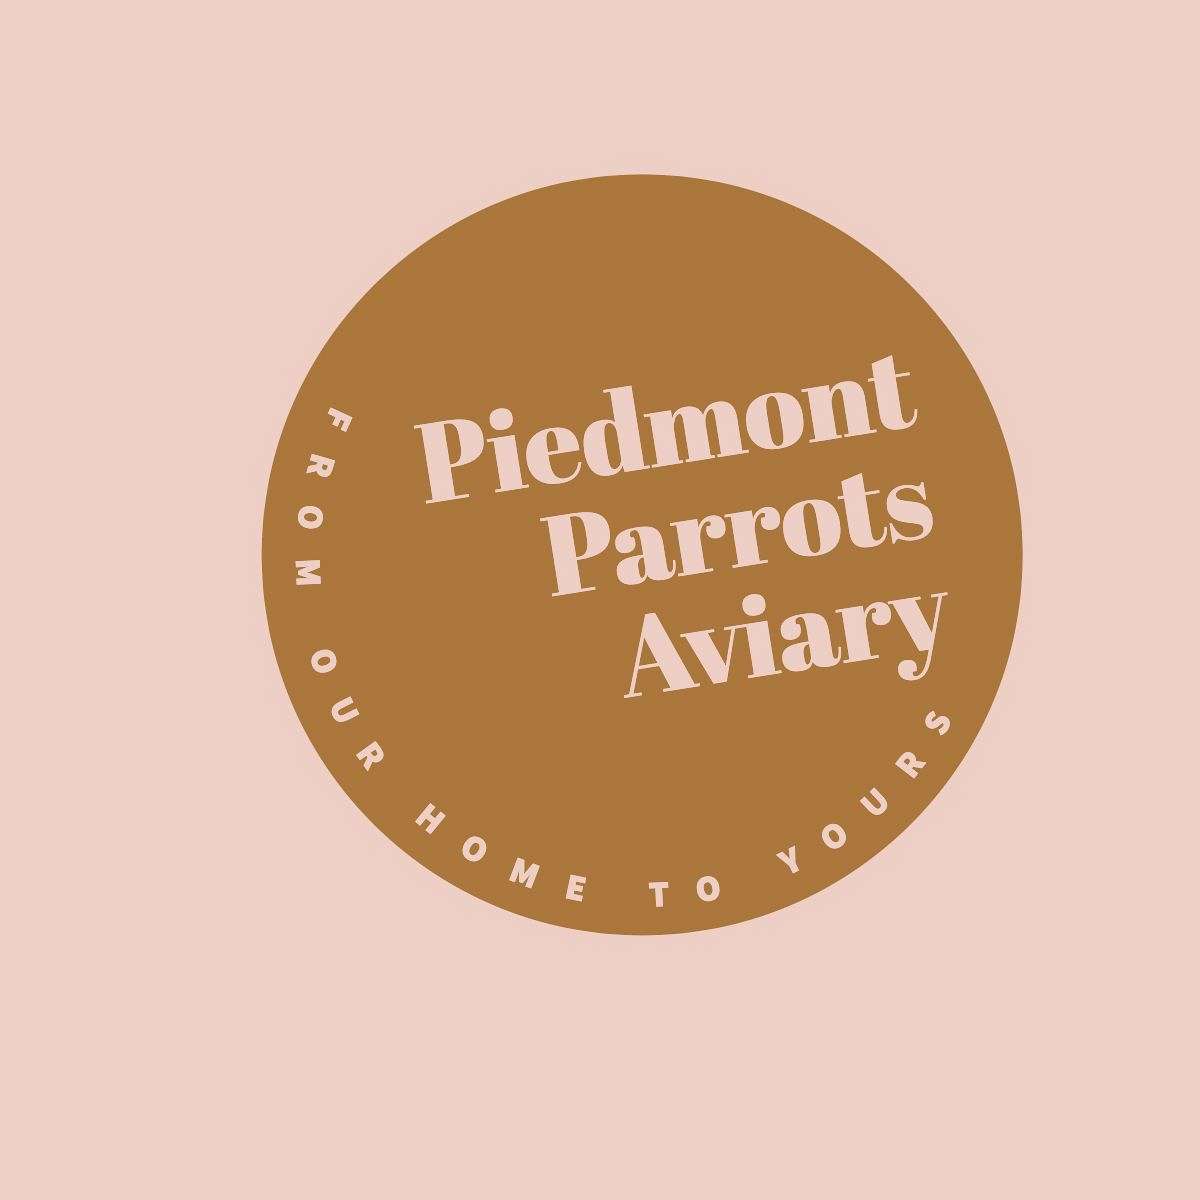 Piedmont Parrots Aviary of Virginia